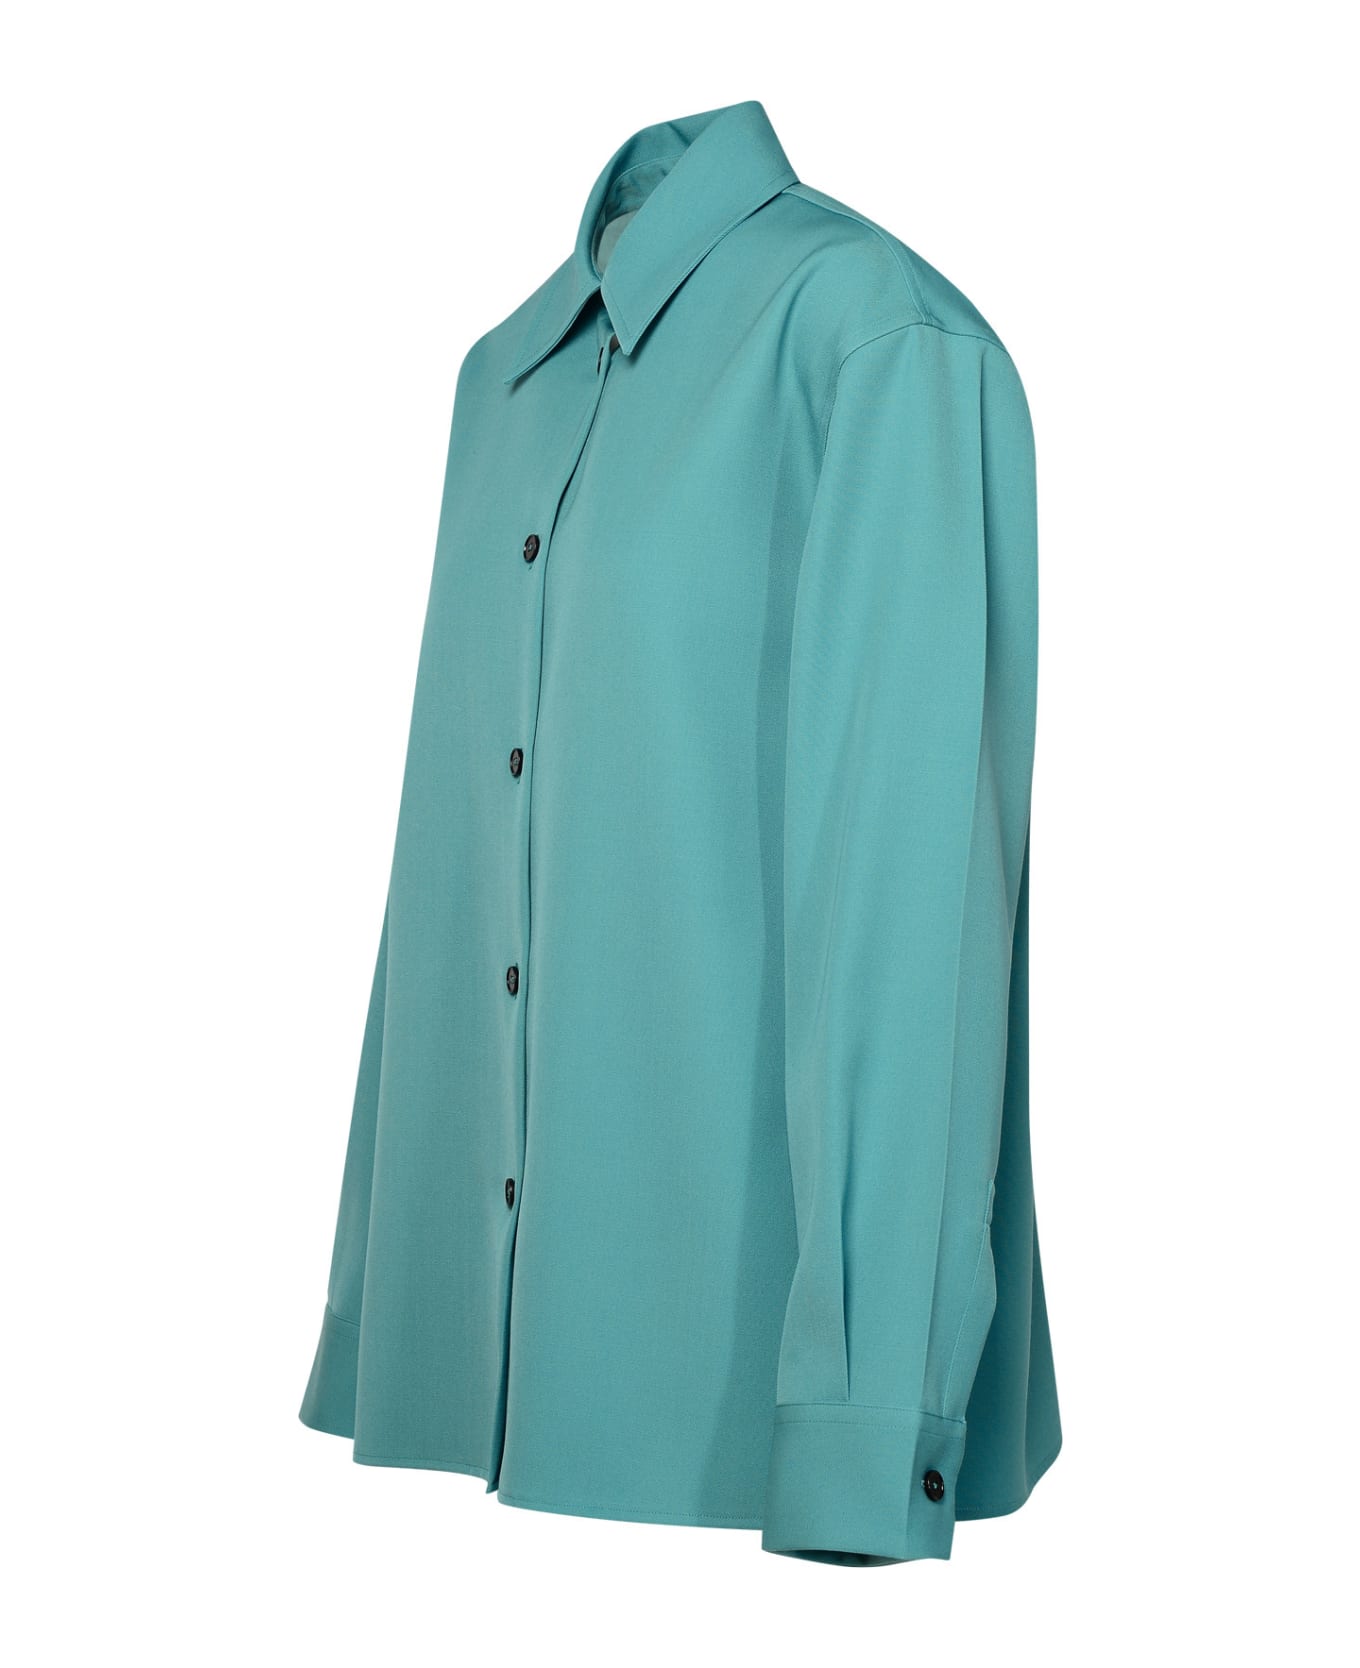 Jil Sander Turquoise Wool Shirt - Light Blue